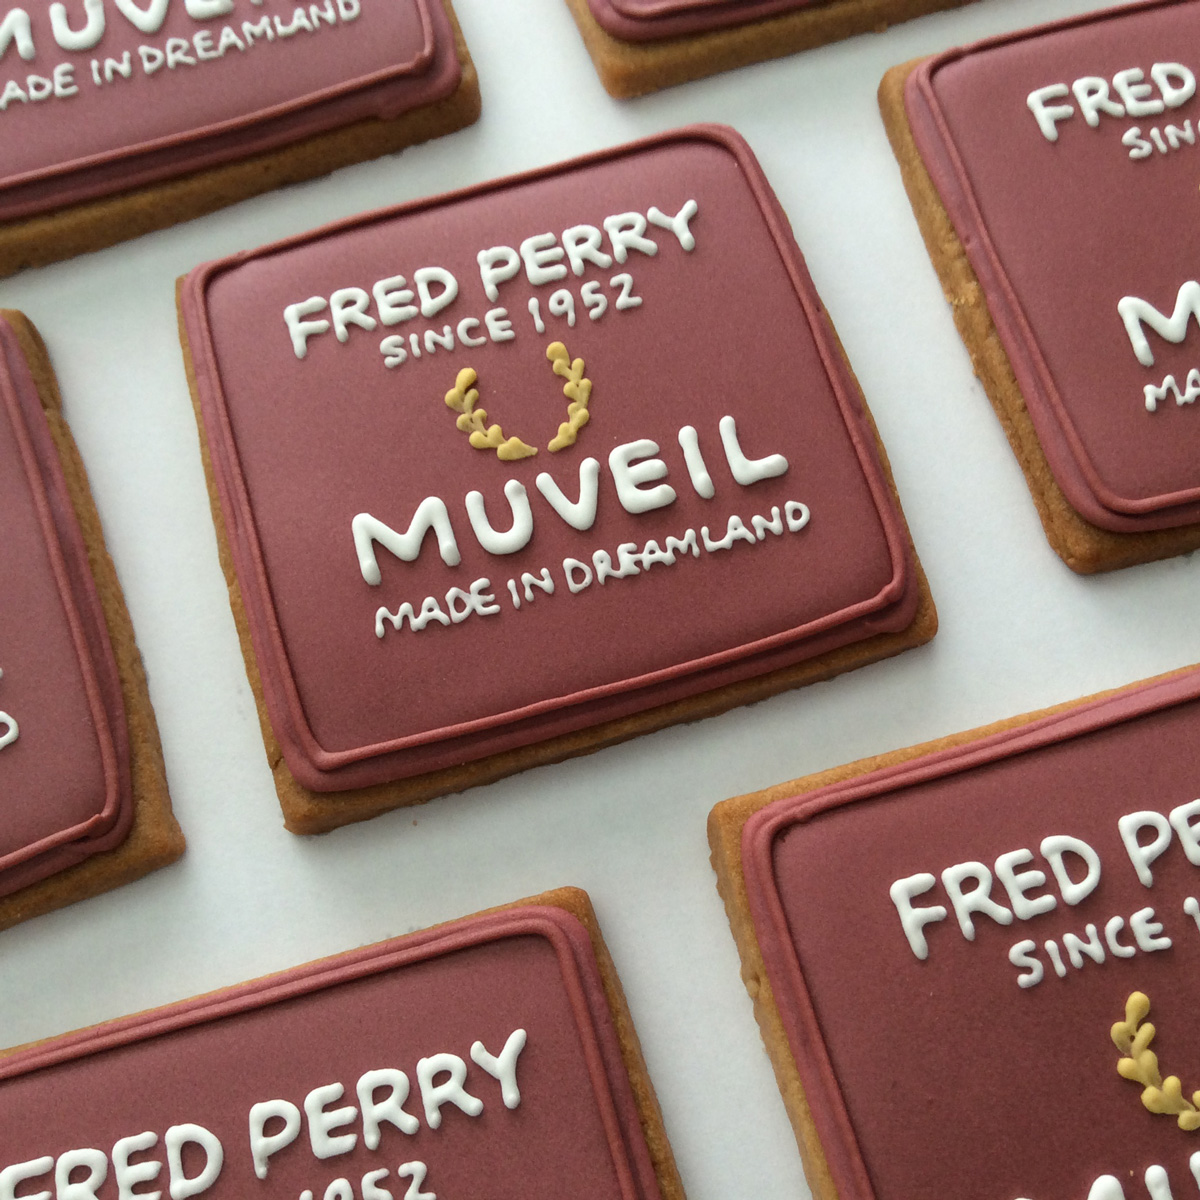 「MUVEIL / FRED PERRY」ノベルティクッキー